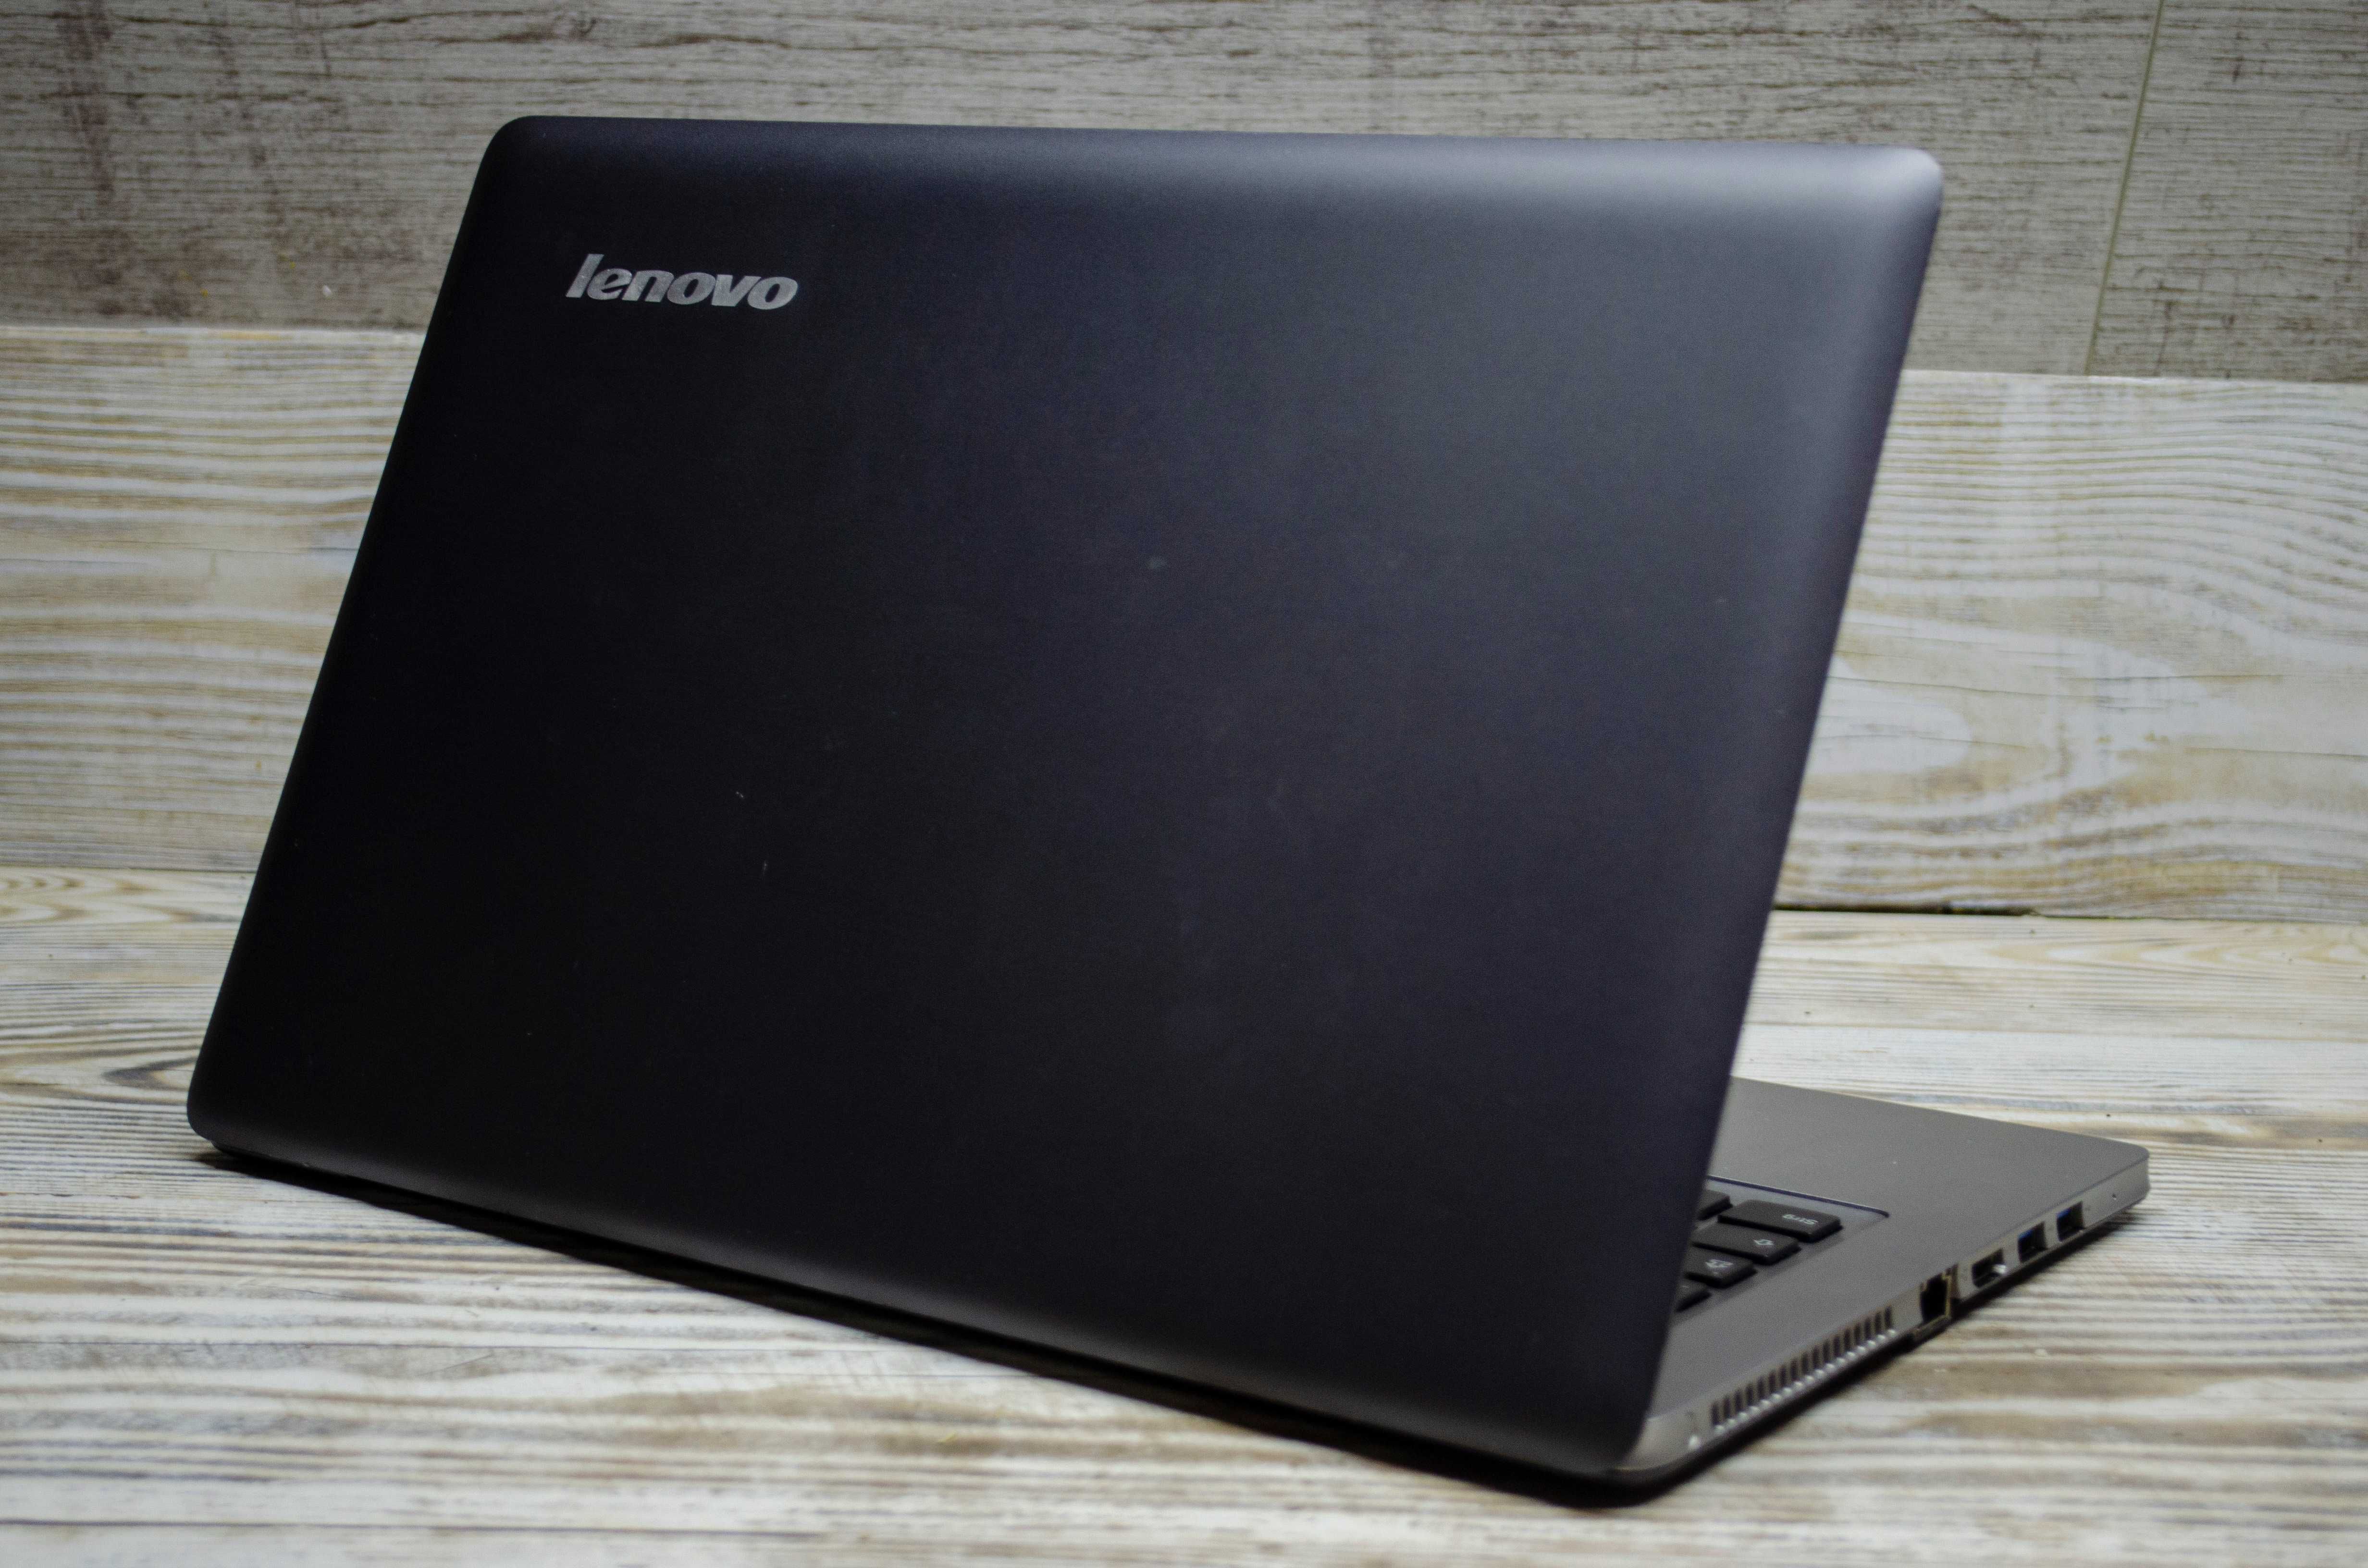 Ультрабук Lenovo IdeaPad U310/батарея 4 год./i3-3217U 1.8Ghz/SSD 120Gb